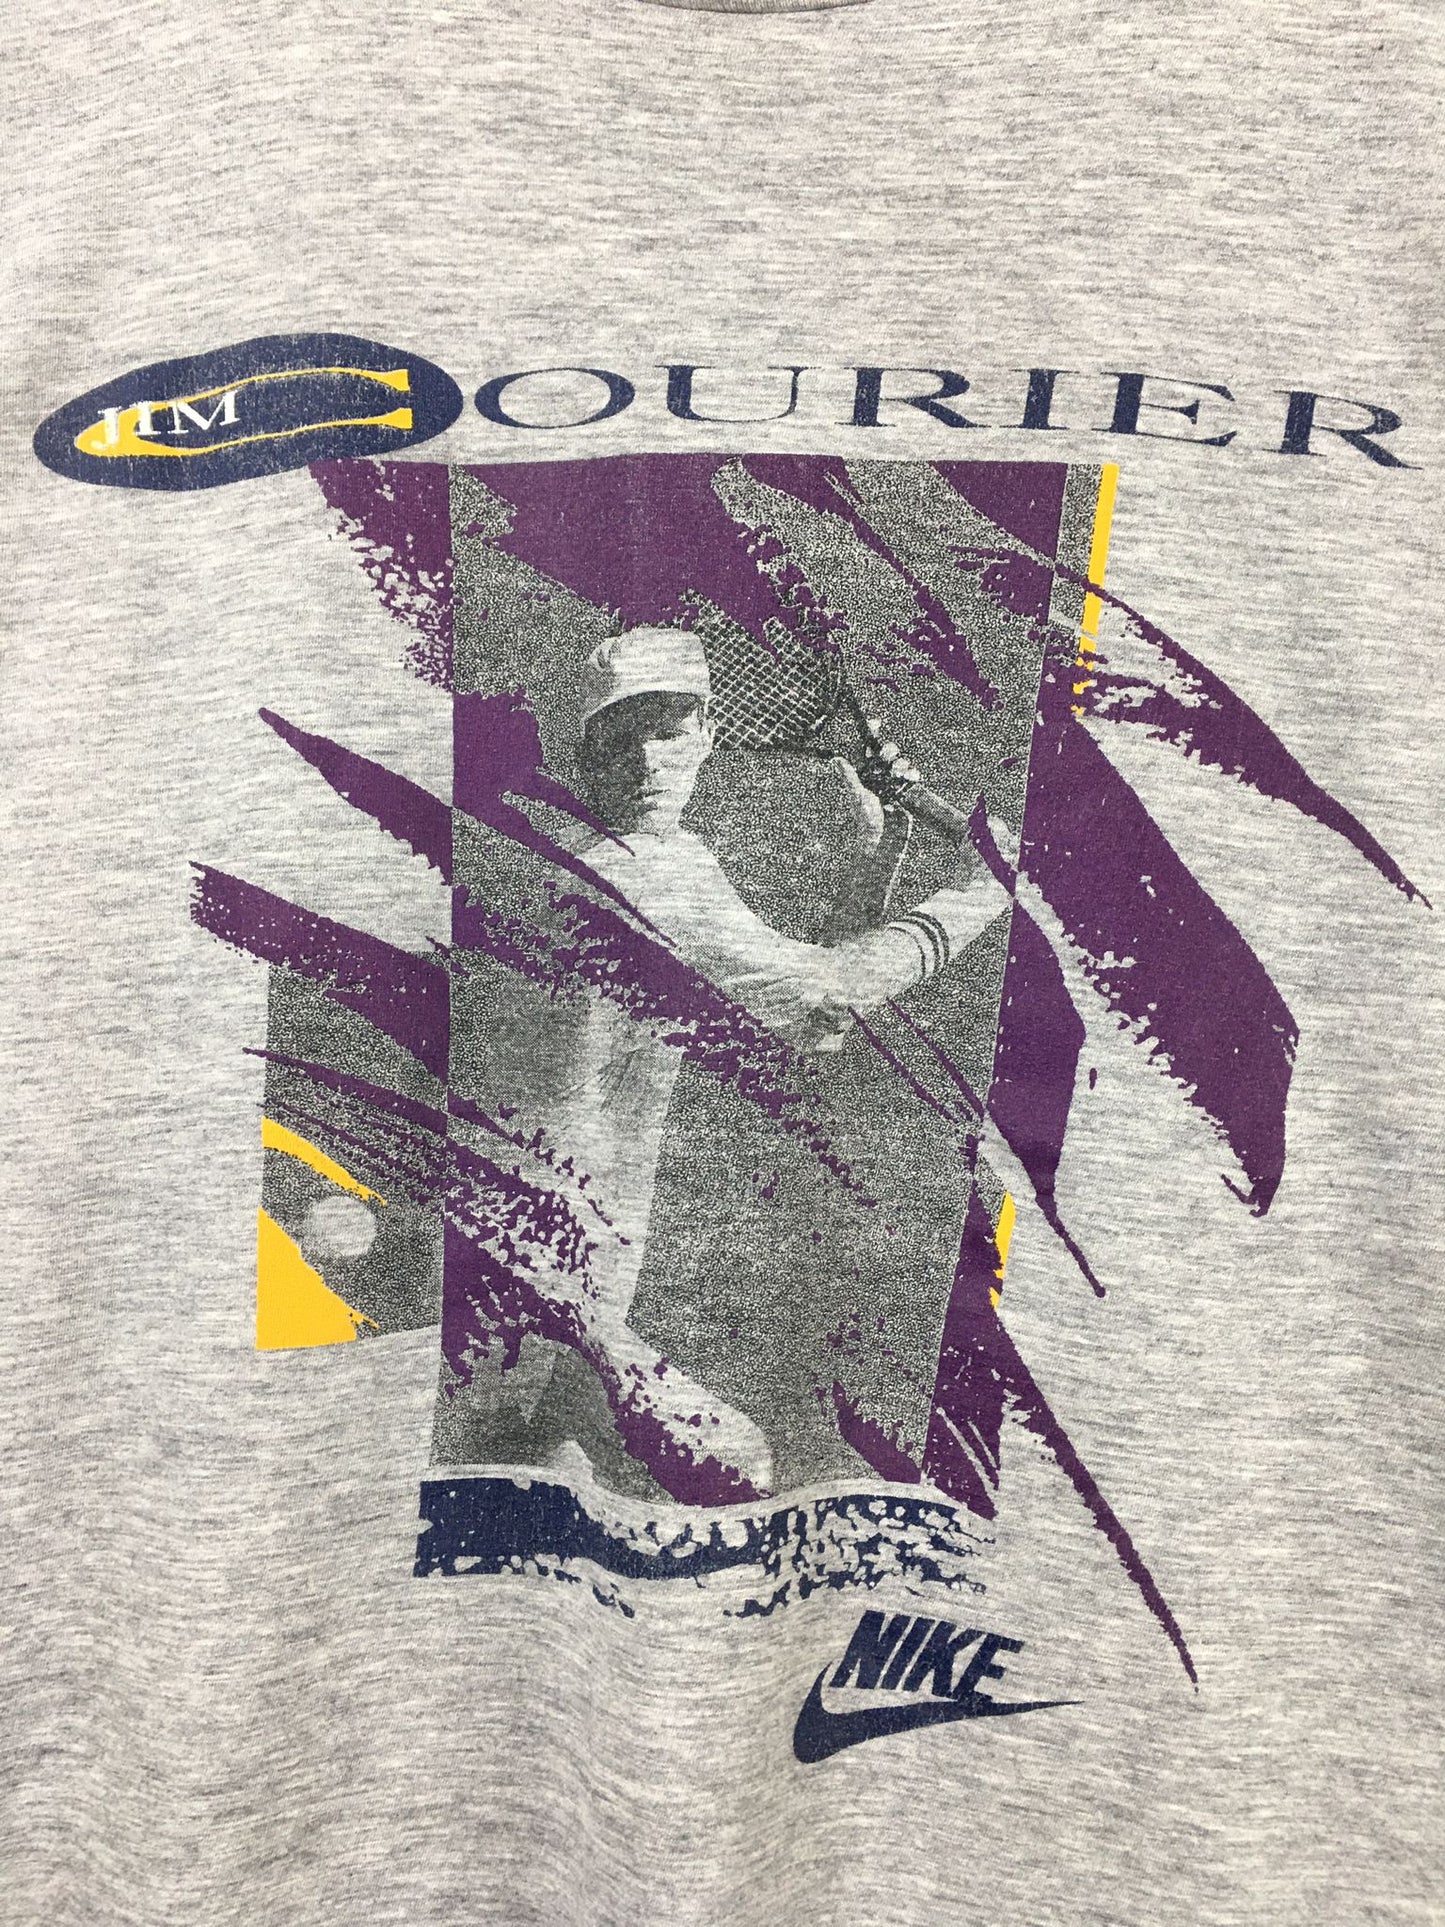 Vintage Nike Tennis 90's "Jim Courier" T-shirt